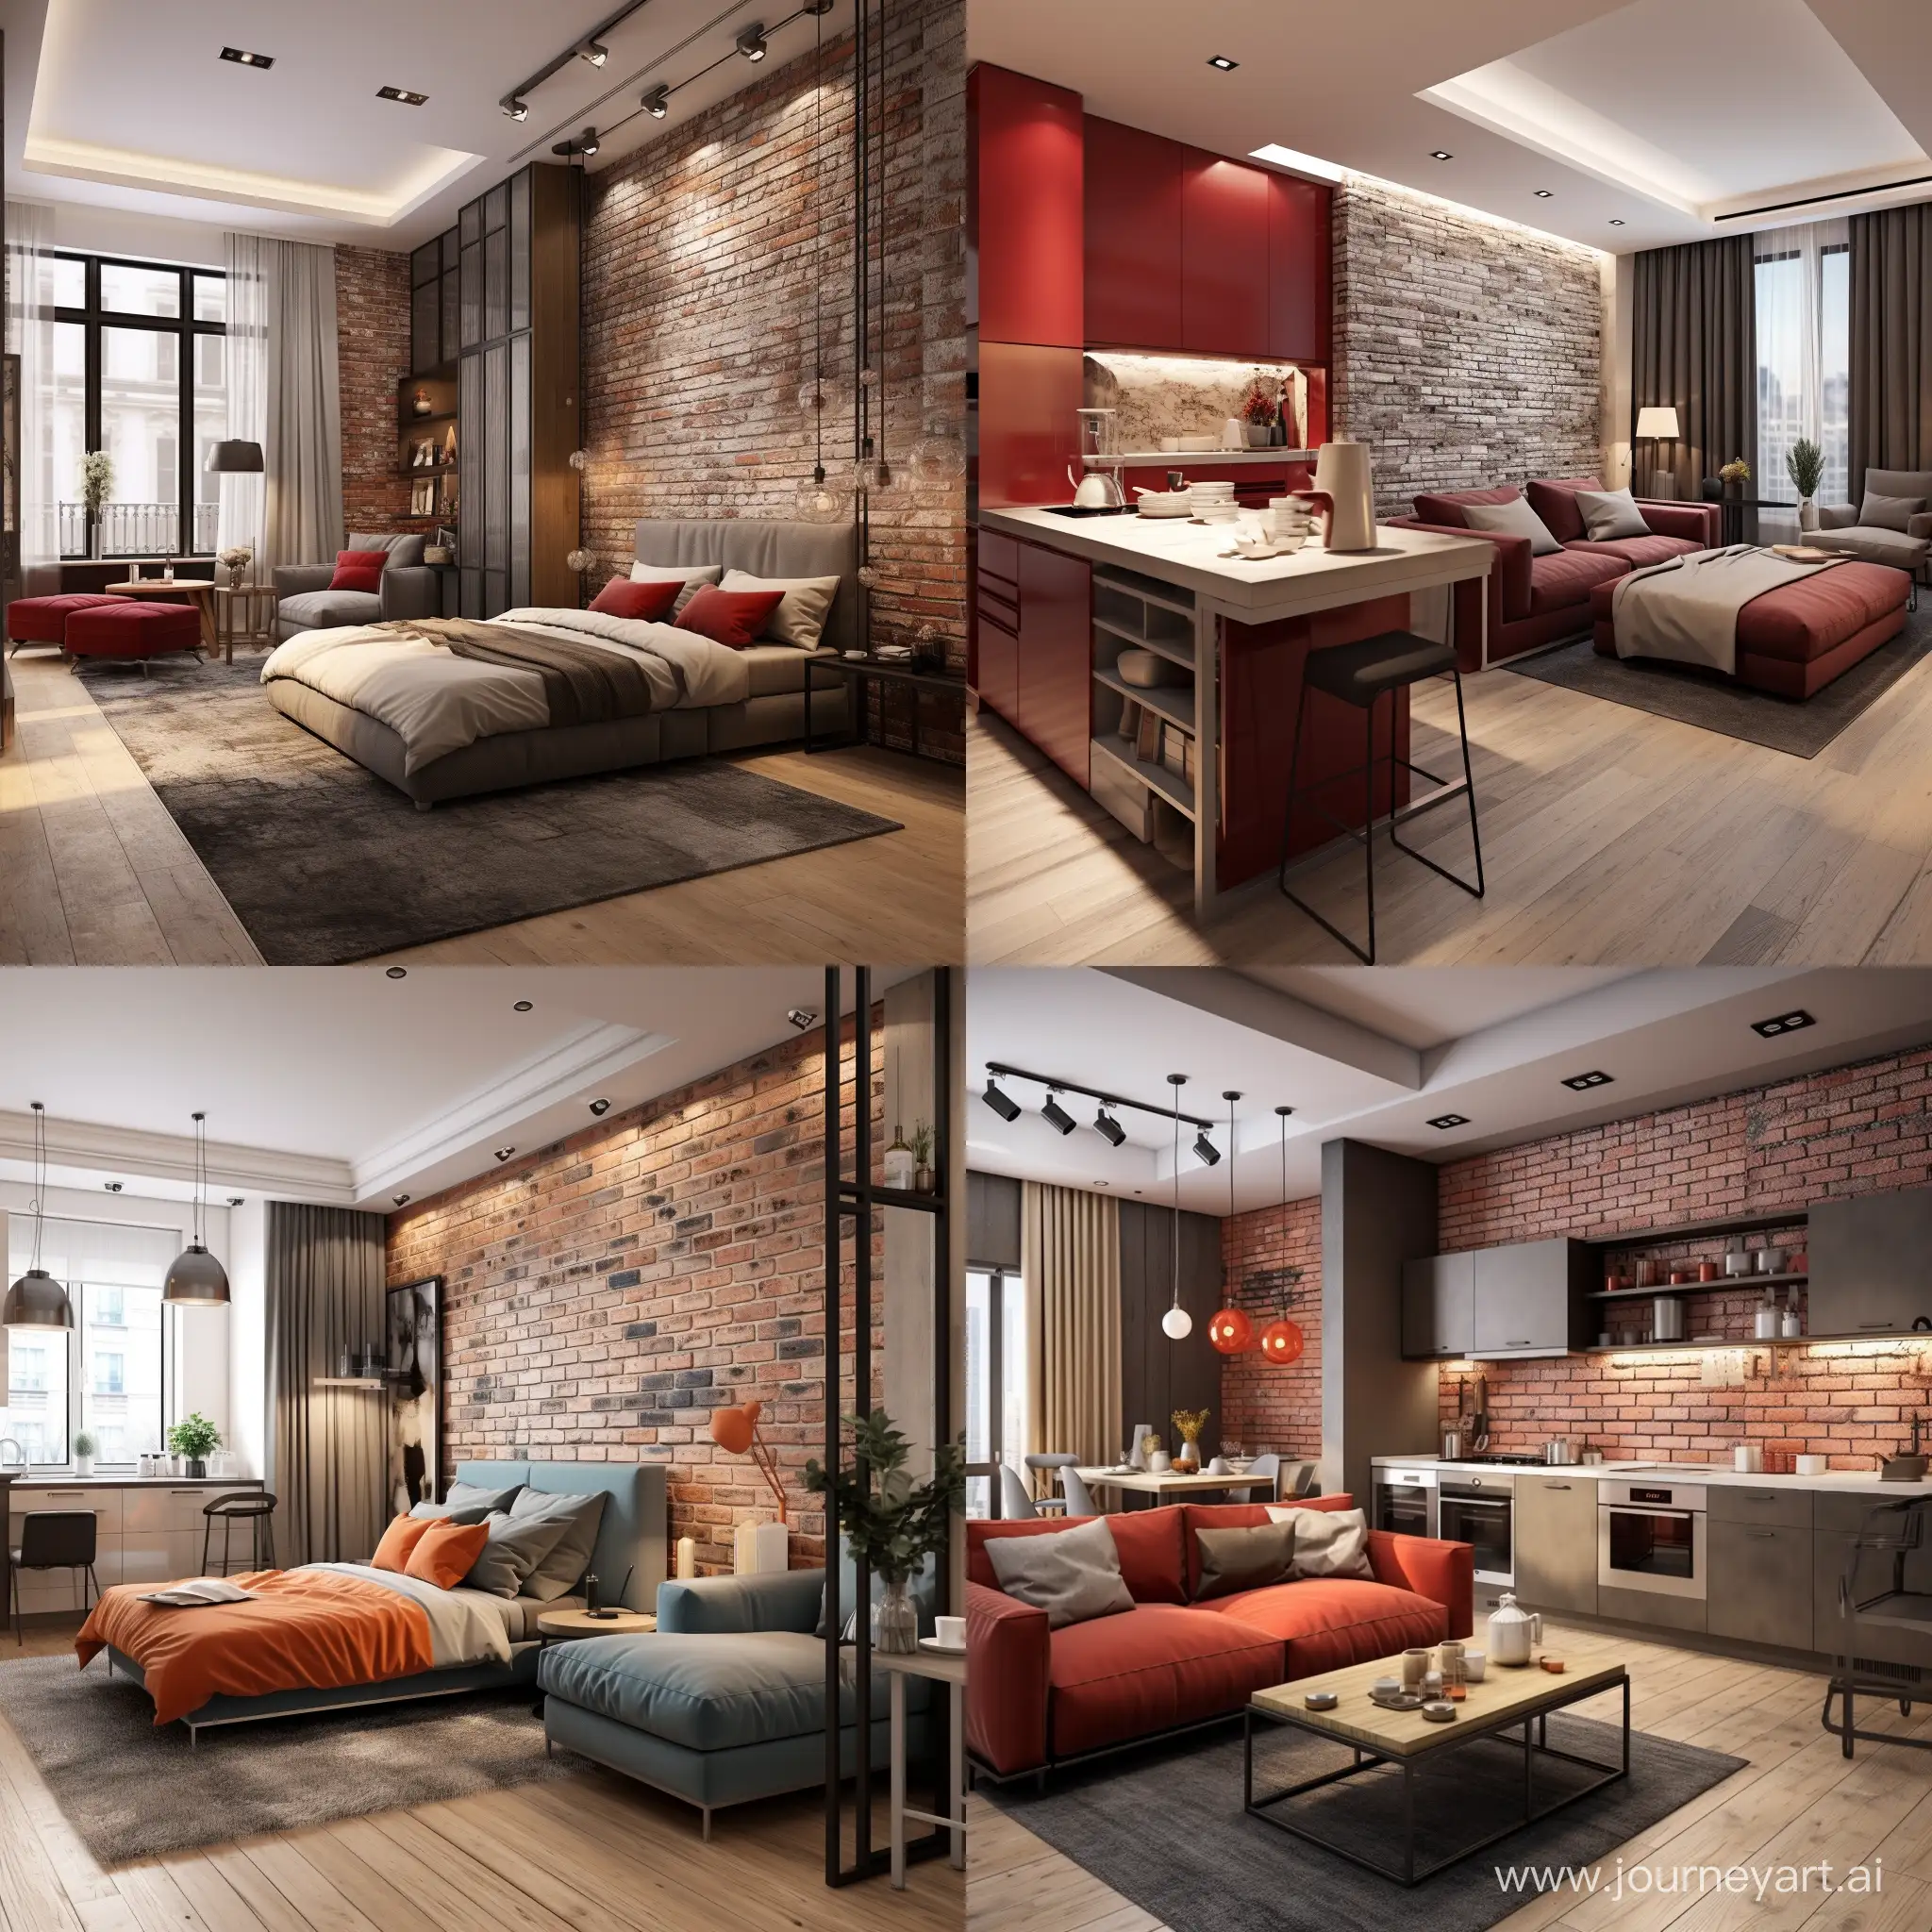 Contemporary-Studio-Apartment-Design-Artificial-Stone-and-Red-Brick-Wall-Finish